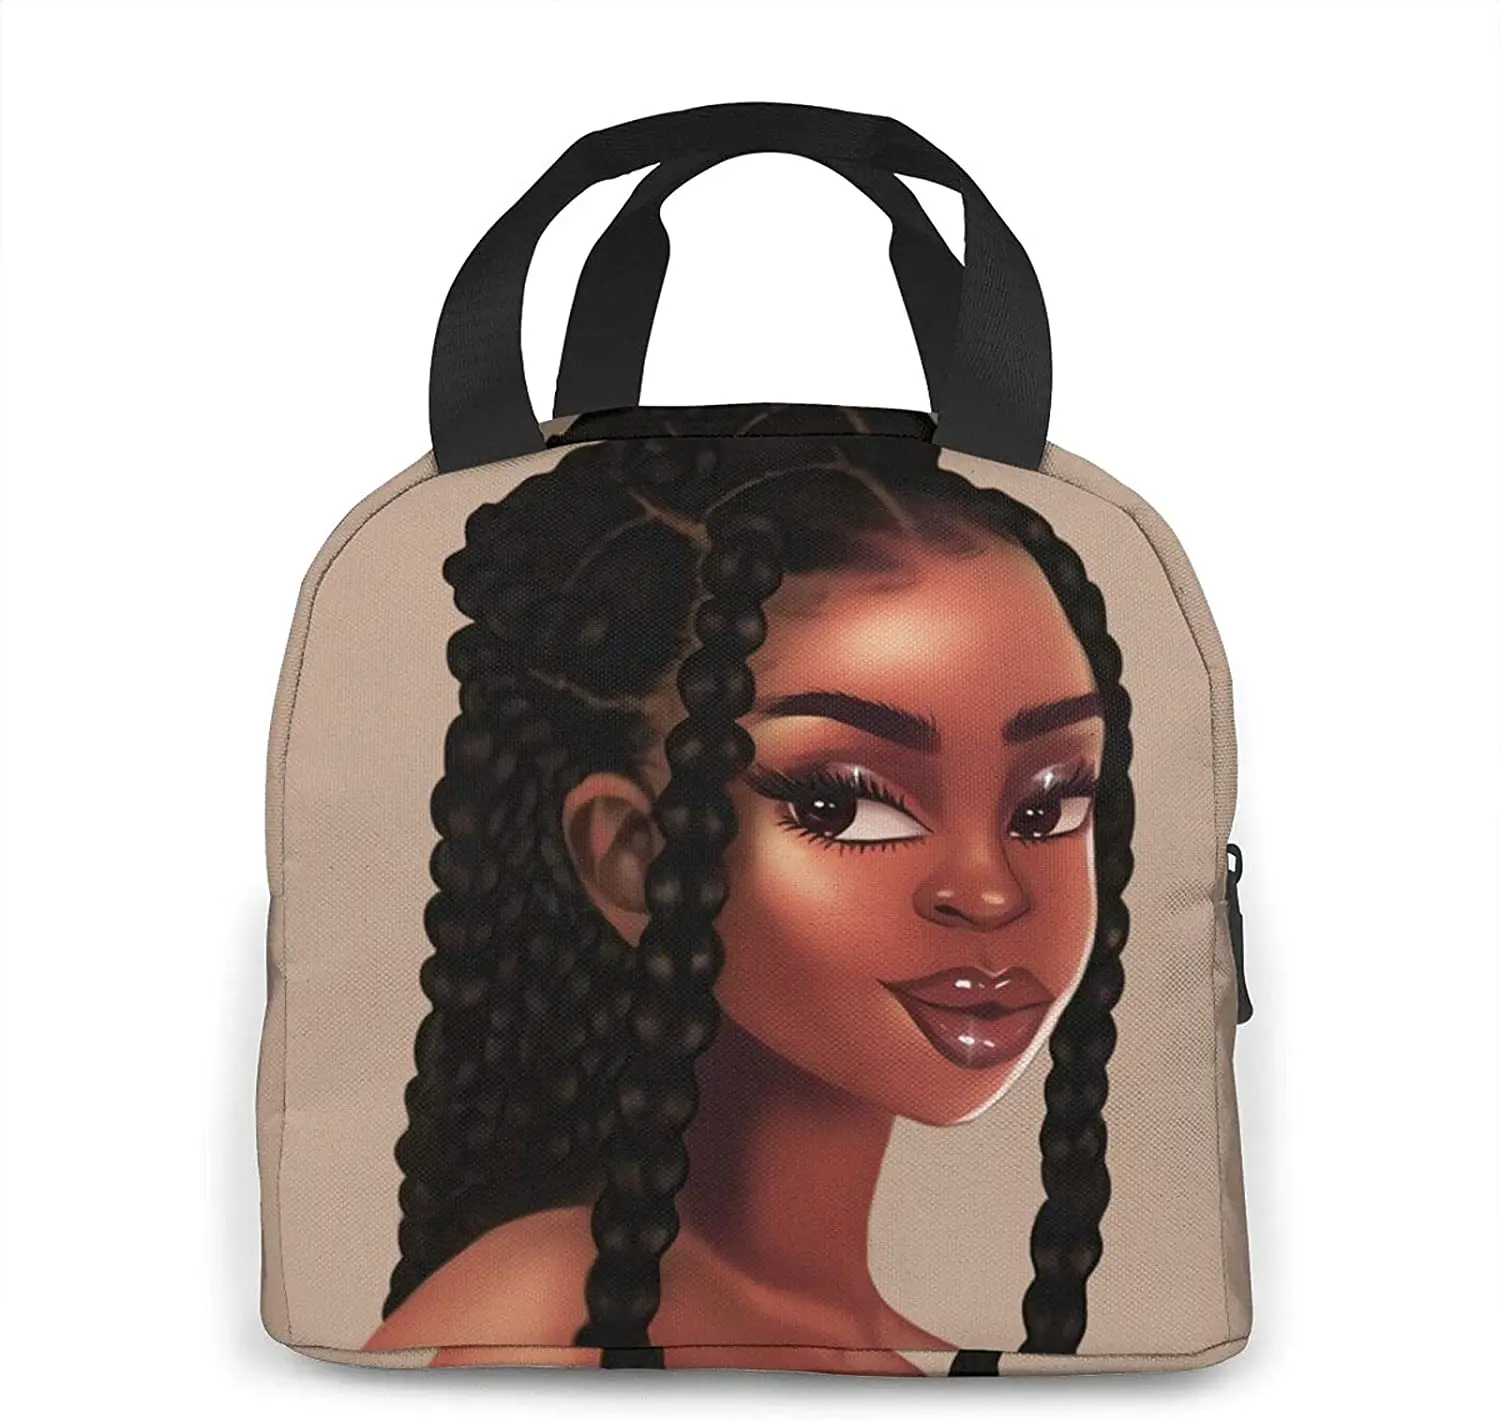 Afro Women Lunch Bag Black Girls Handbag Lunch Kit Insulated Cooler Box For  Travel, Picnic, Work, School Reusable| | - AliExpress